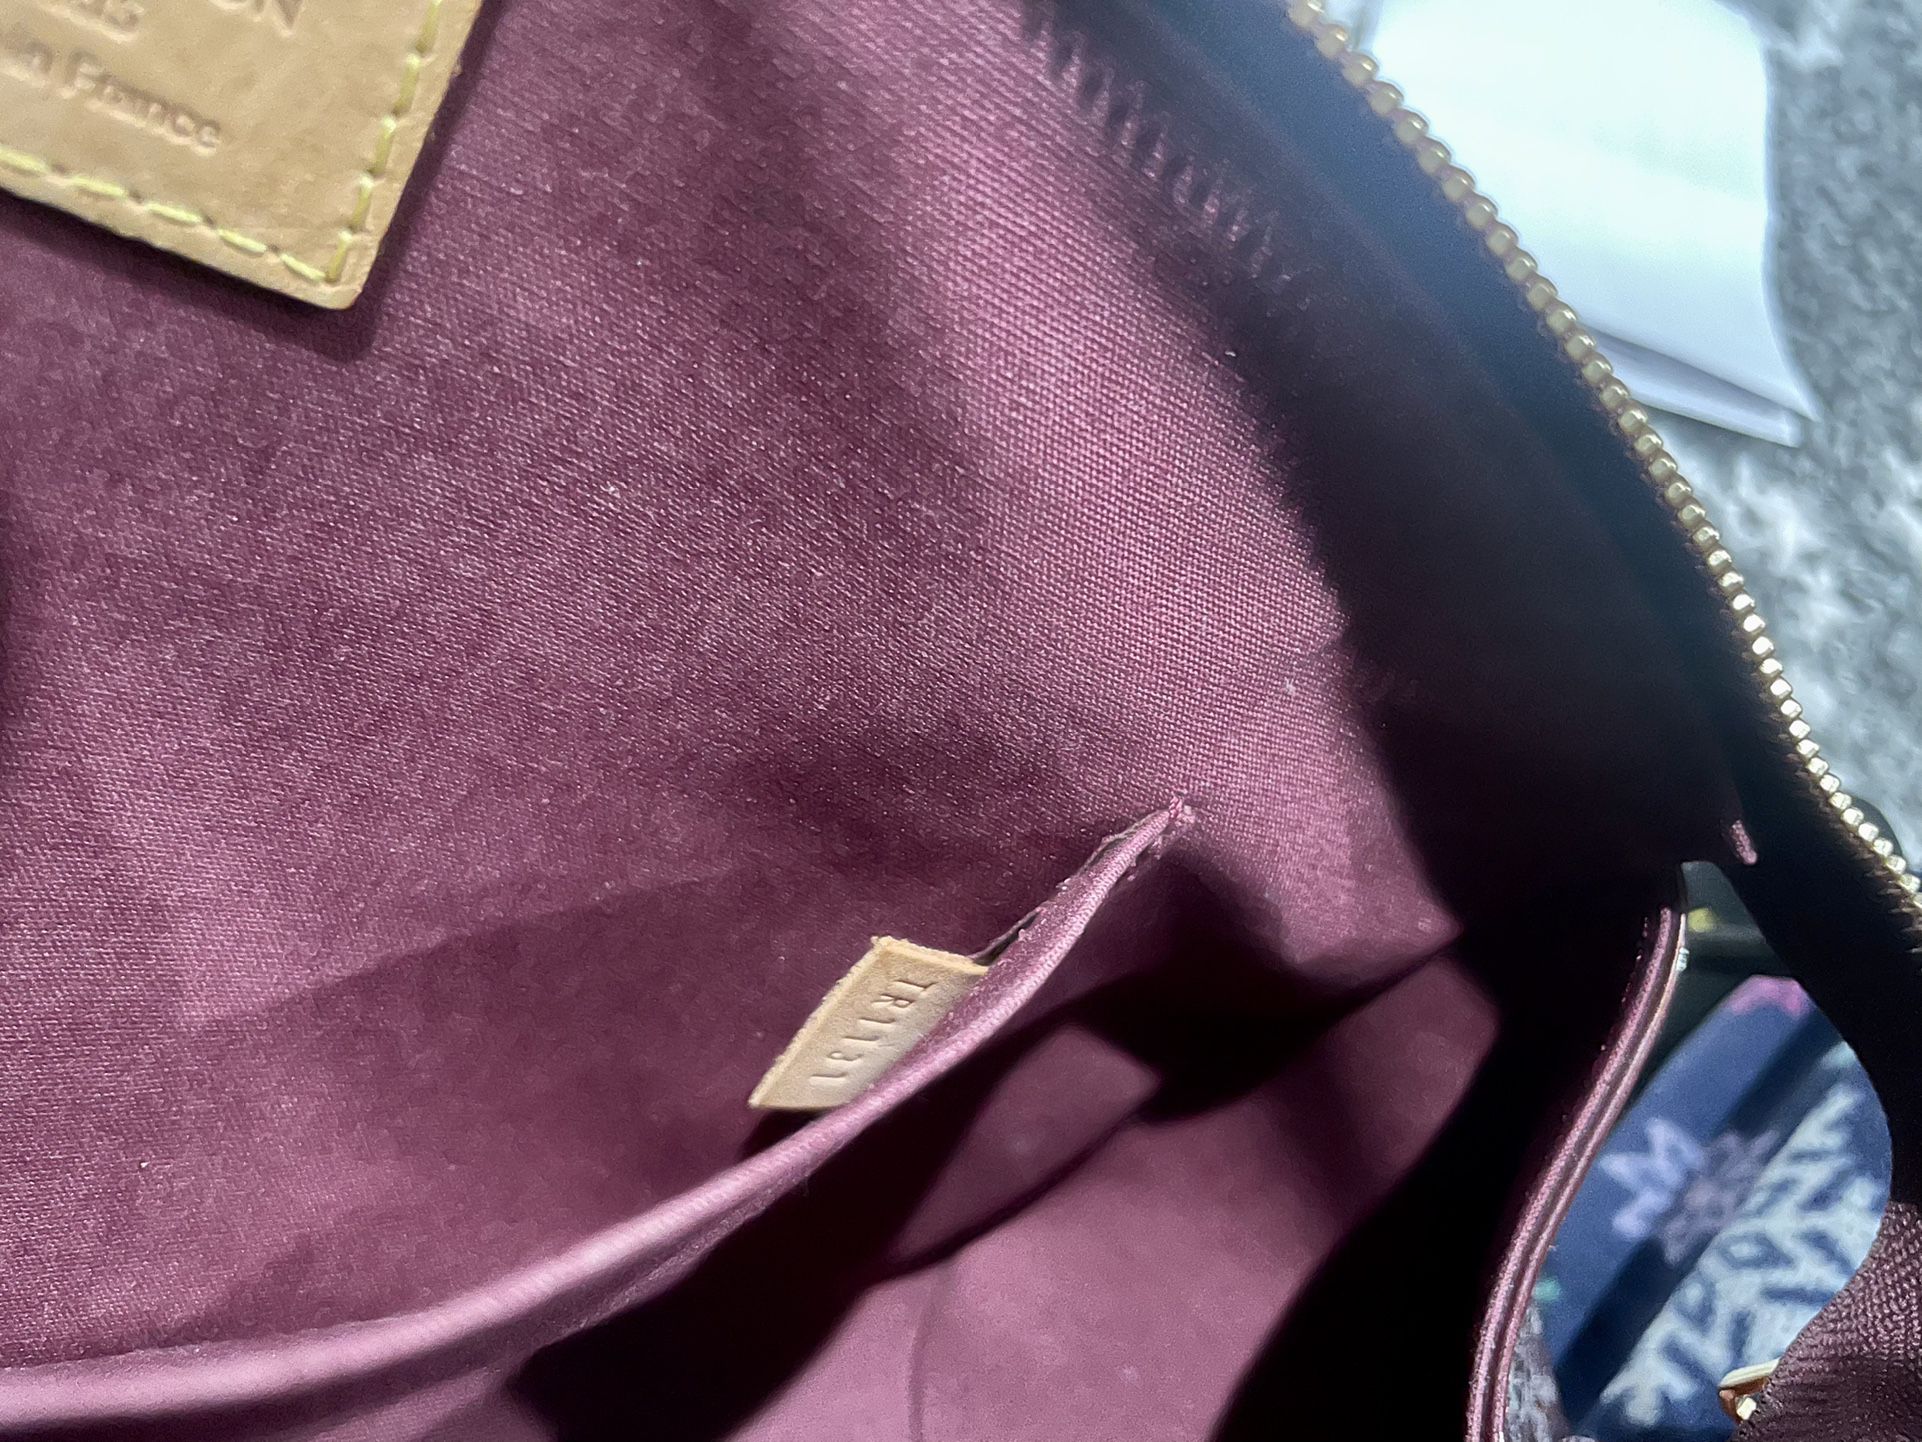 Louis Vuitton Vernis Thompson Street Shoulder Bag Purple for Sale in  Mission Viejo, CA - OfferUp